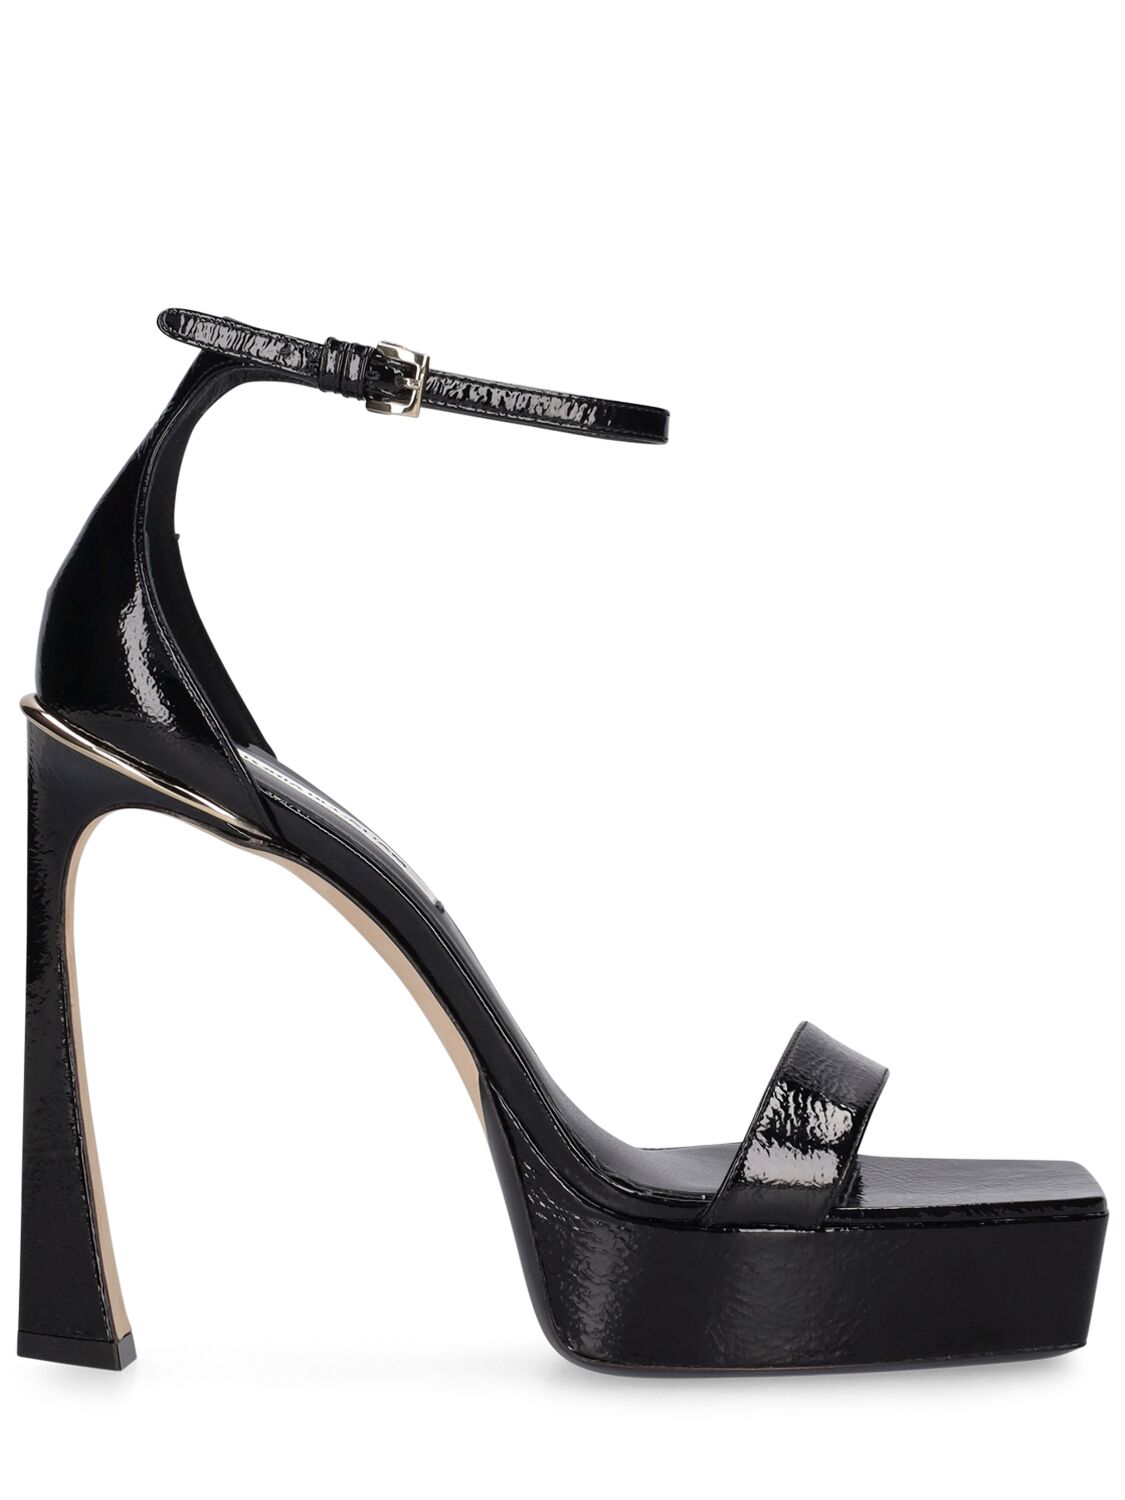 Victoria Beckham Patent Leather Platform Sandals In Black